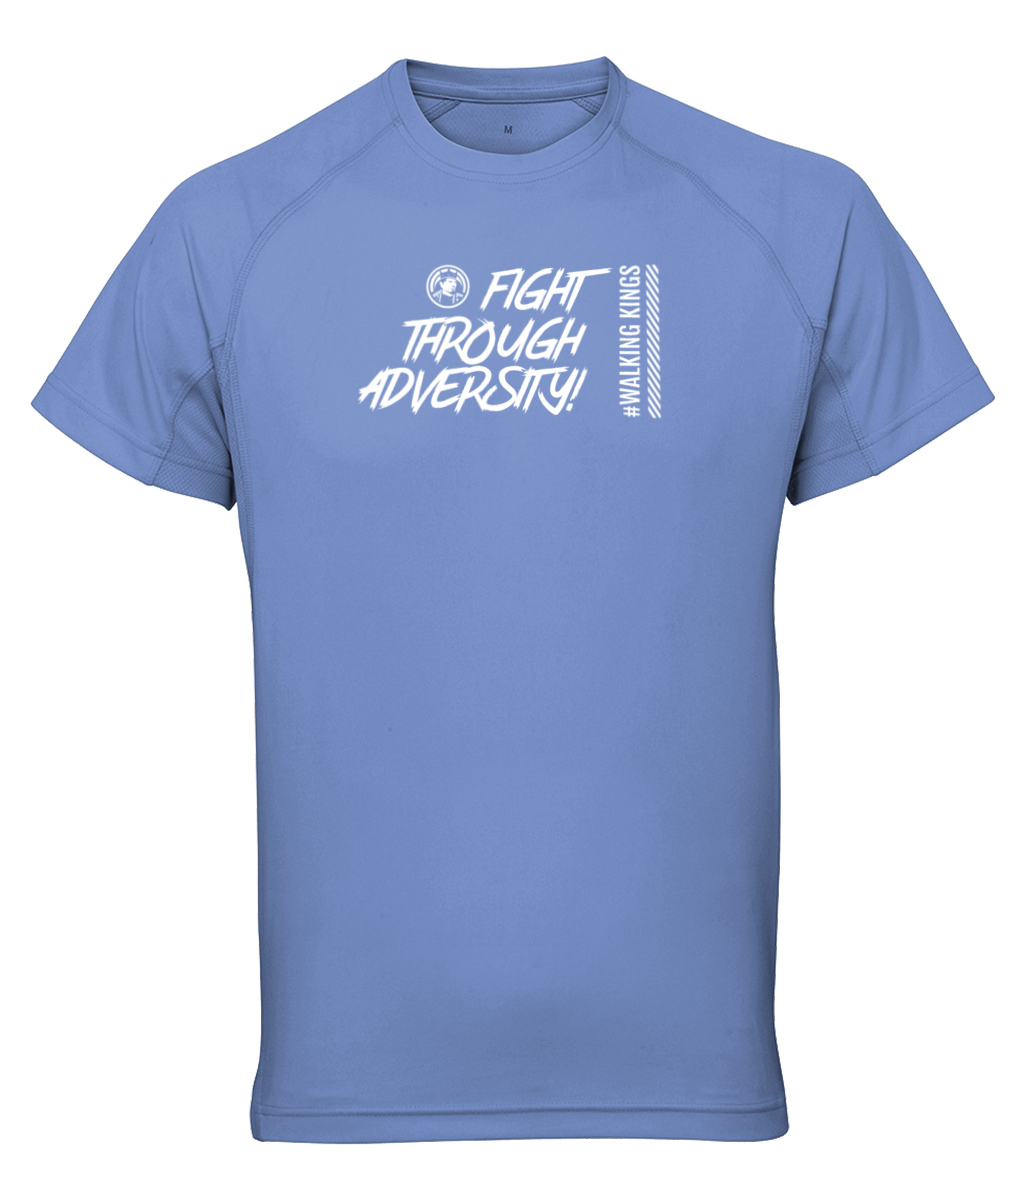 "Fight through aversity!" GYM Shirt